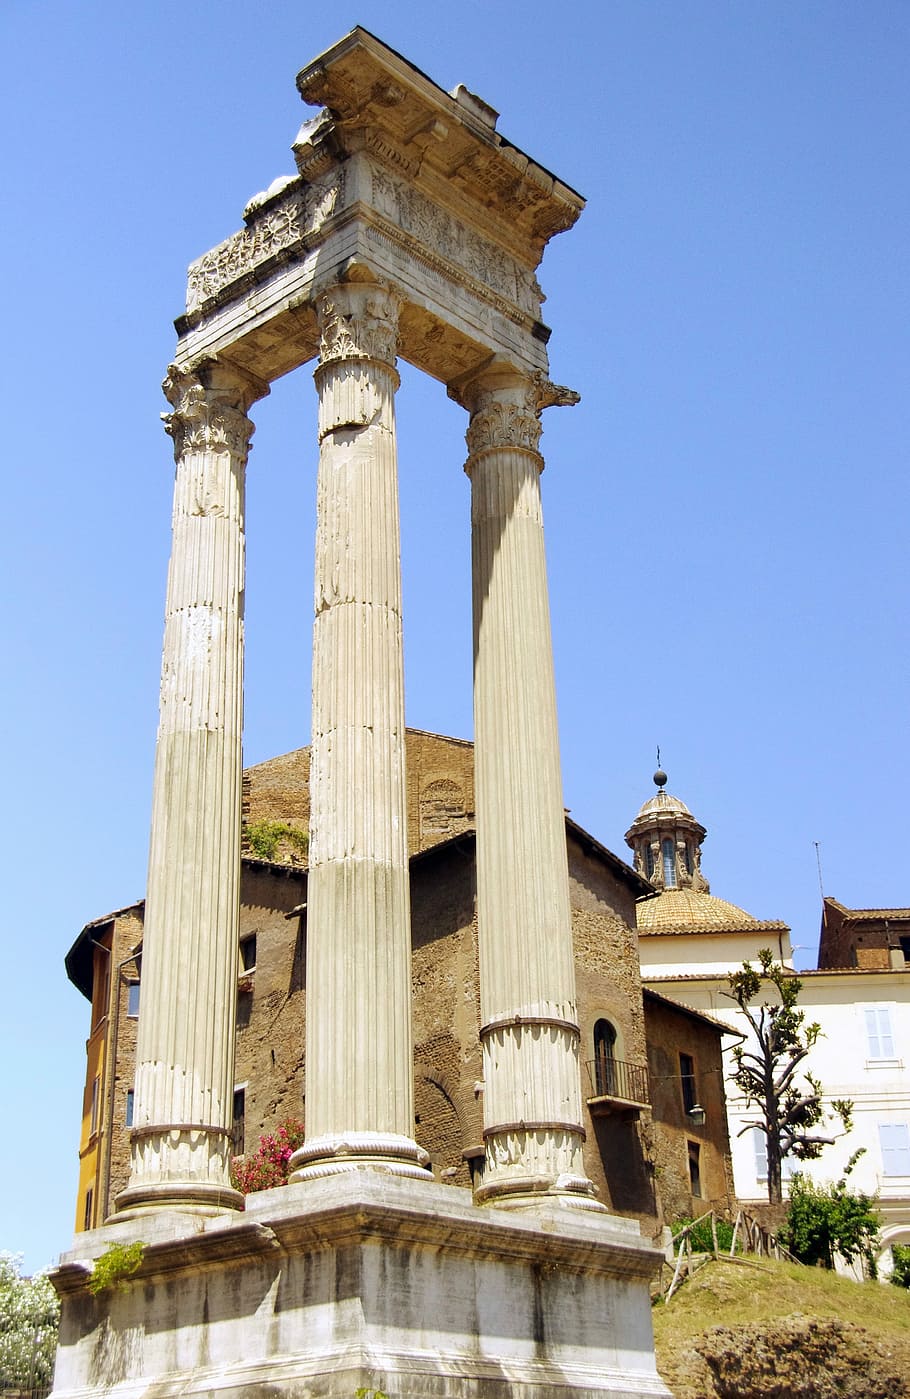 италия, рим, форум, колонны, мрамор, антиквариат, древний рим, архитектура, небо, построенная конструкция